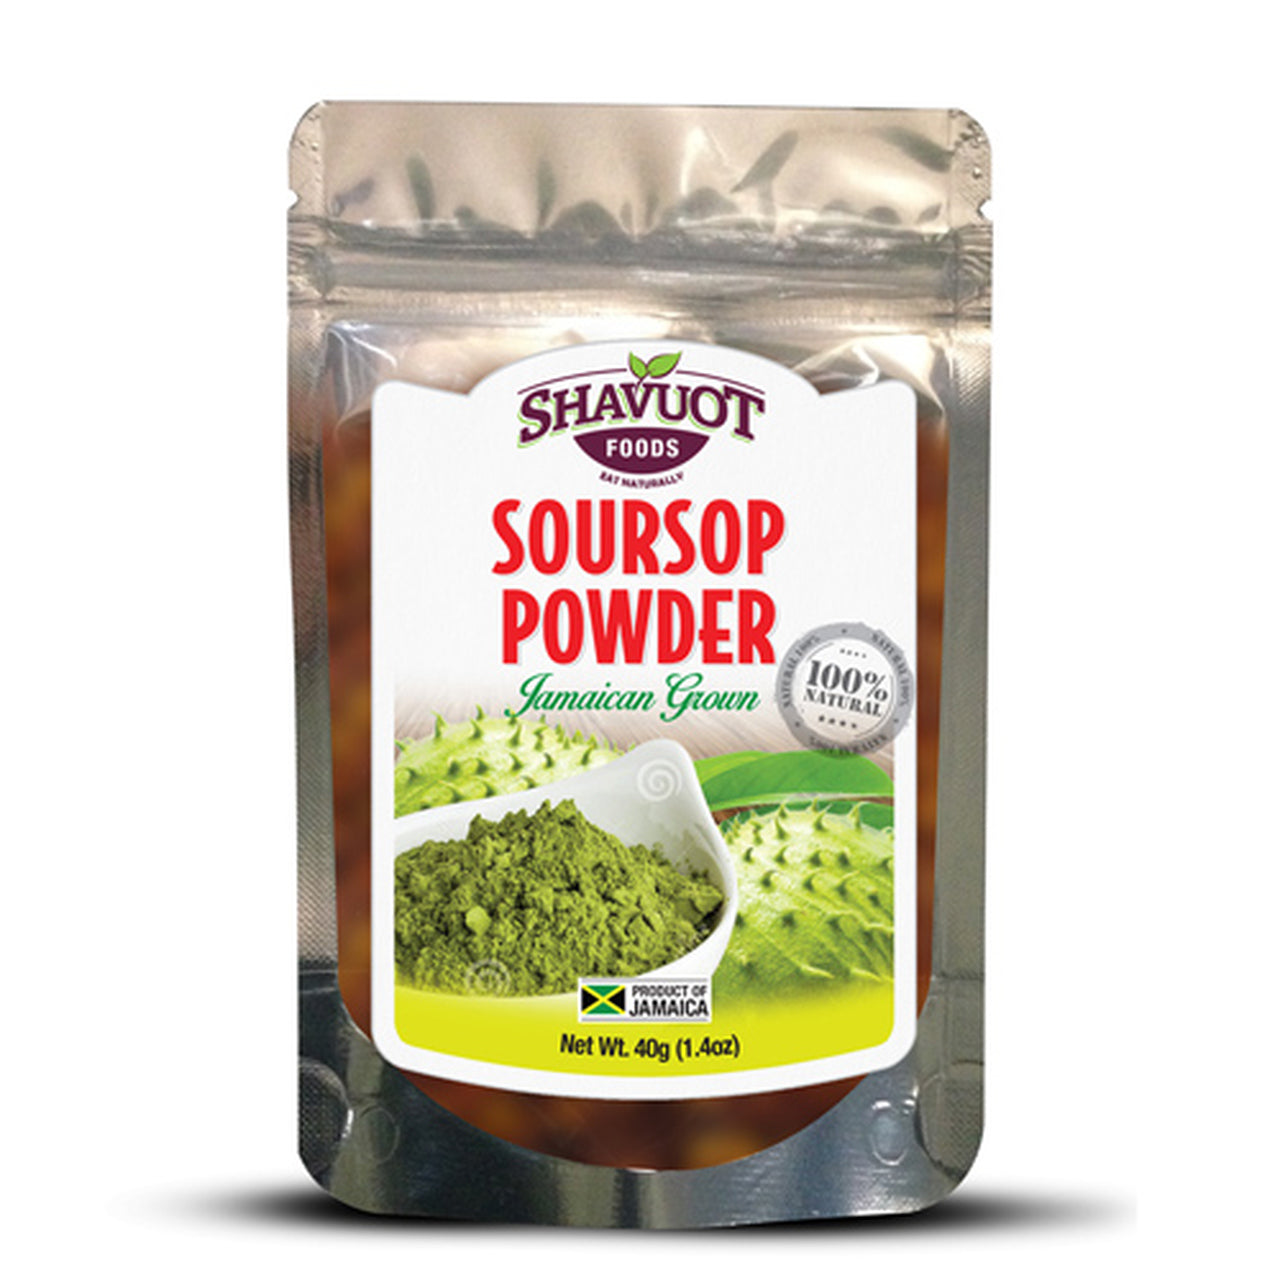 Shavuot Soursop Powder 40g